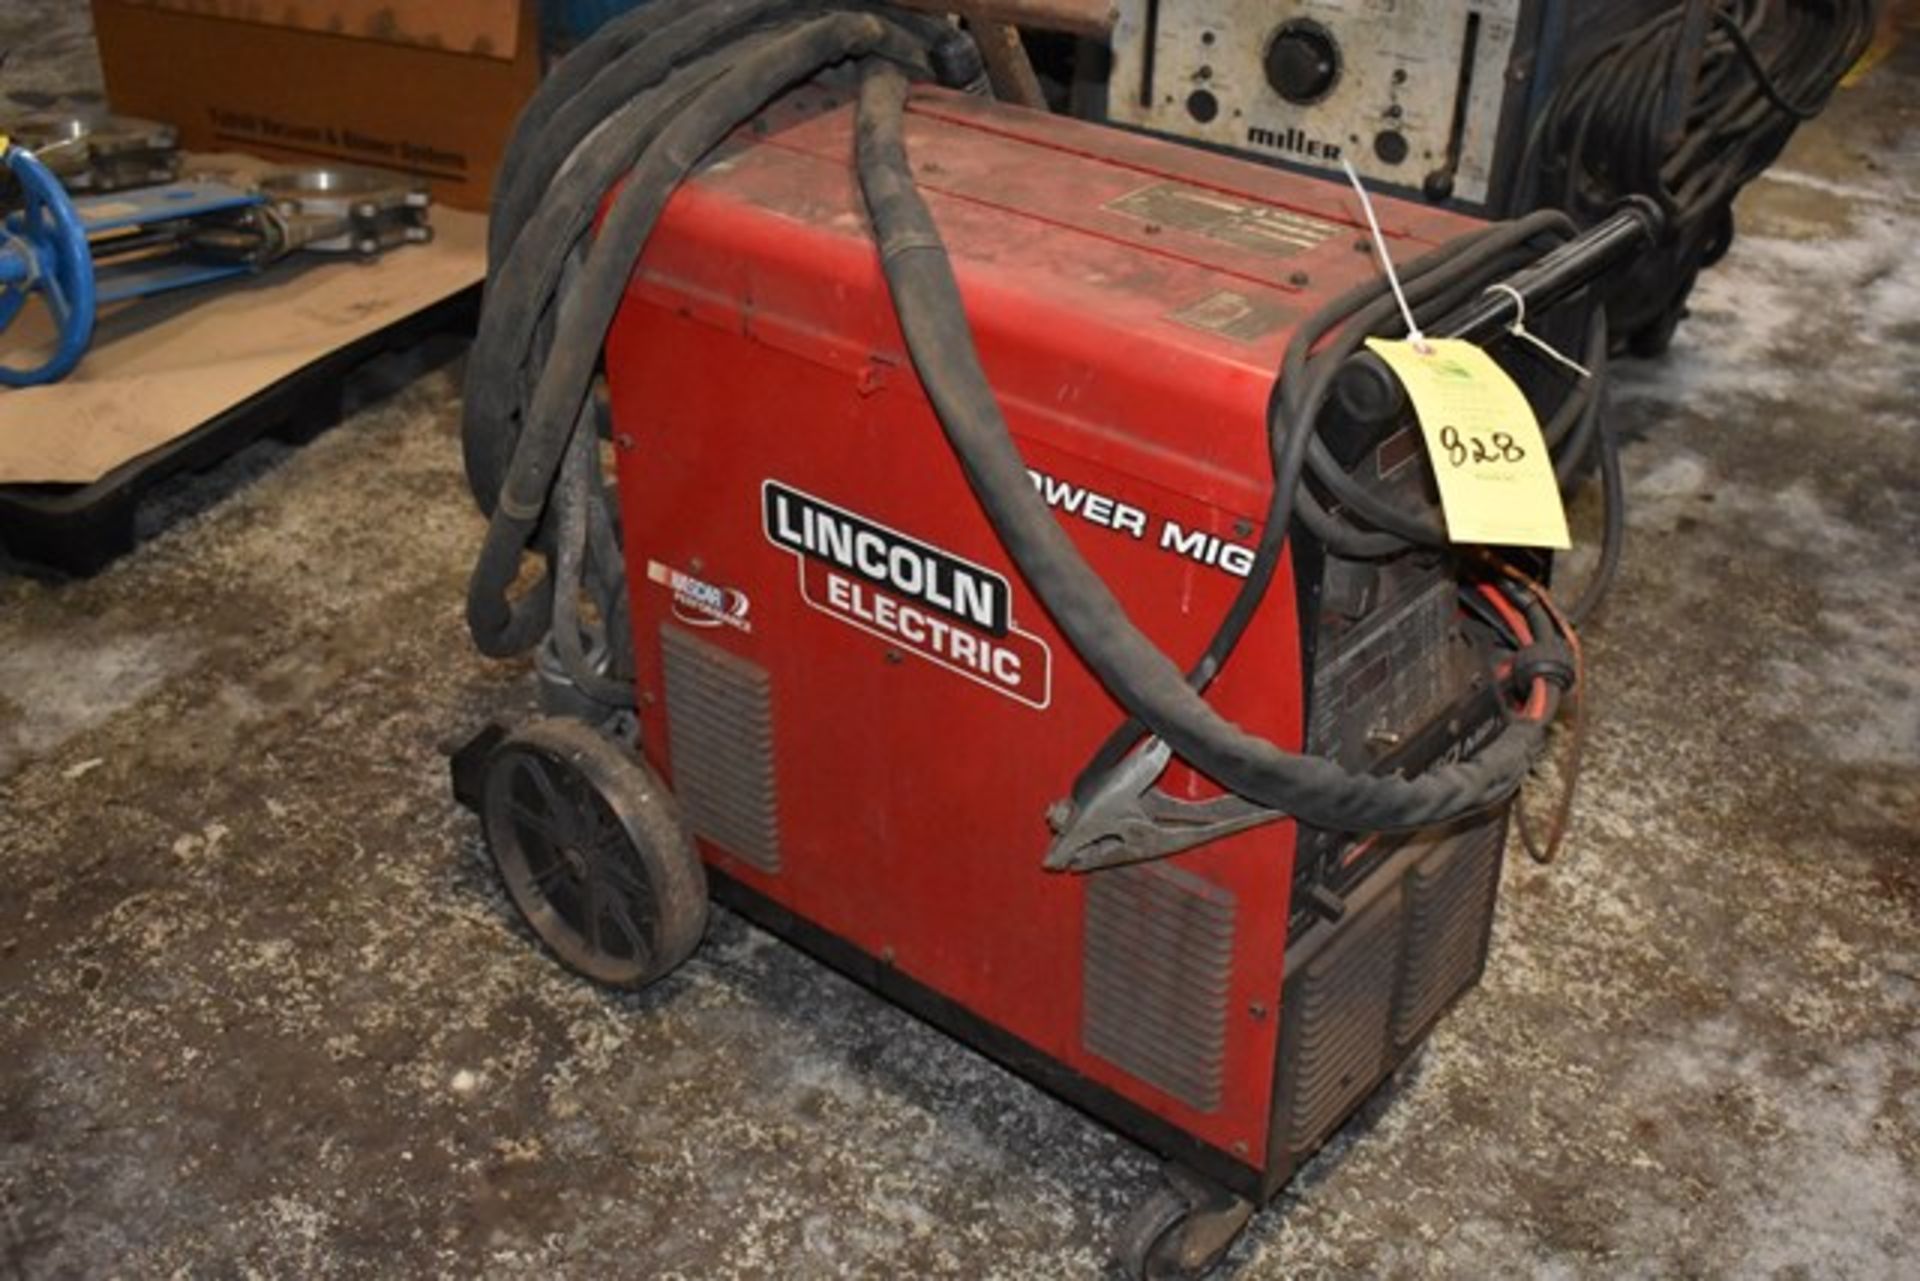 Lincoln welder, mod. 350MP, s/n K2403111147